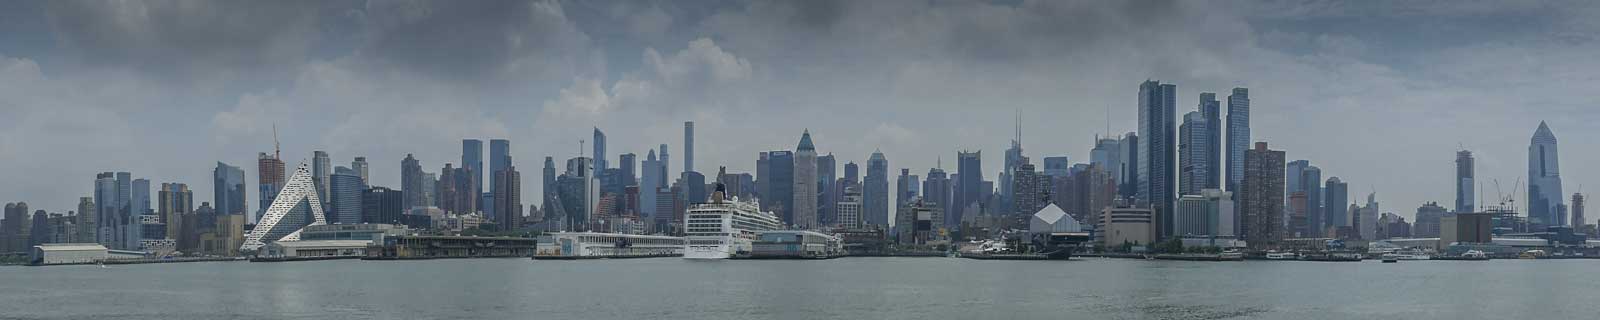 Midtown-West-Manhattan-from-Hudson-River-Ferry-1600x320